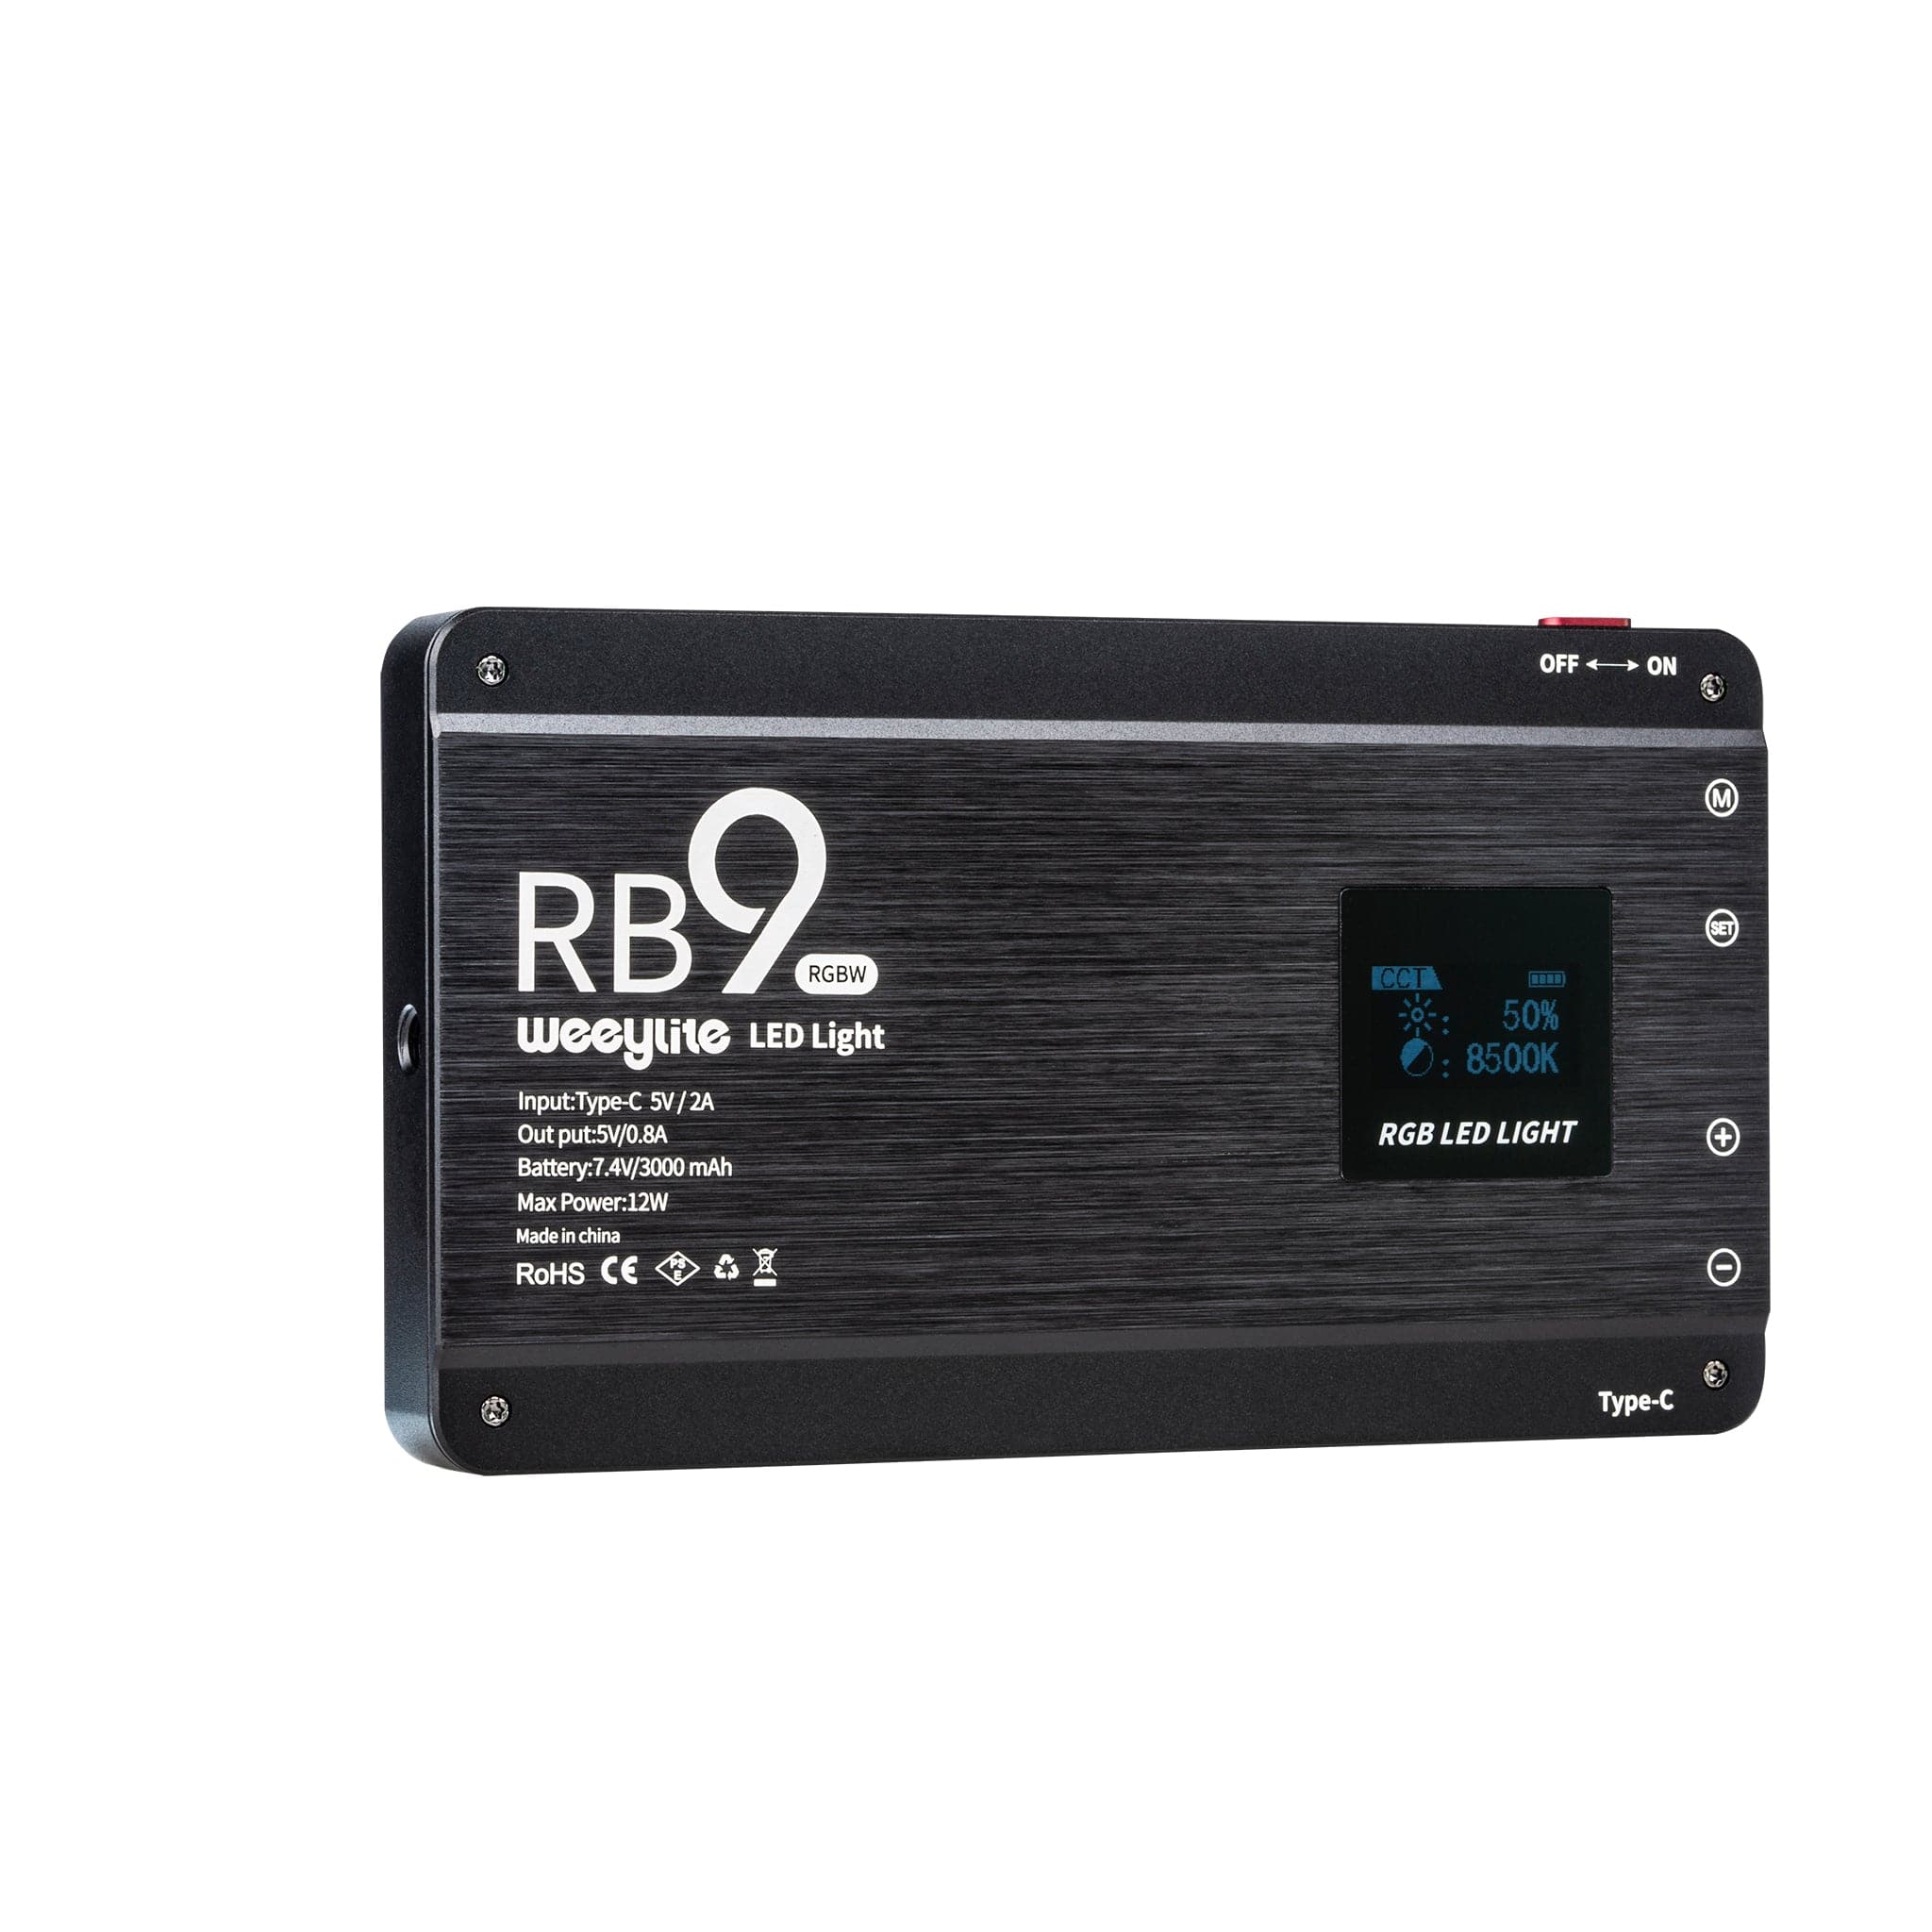 Viltrox RB9 RGBW Portable LED Light